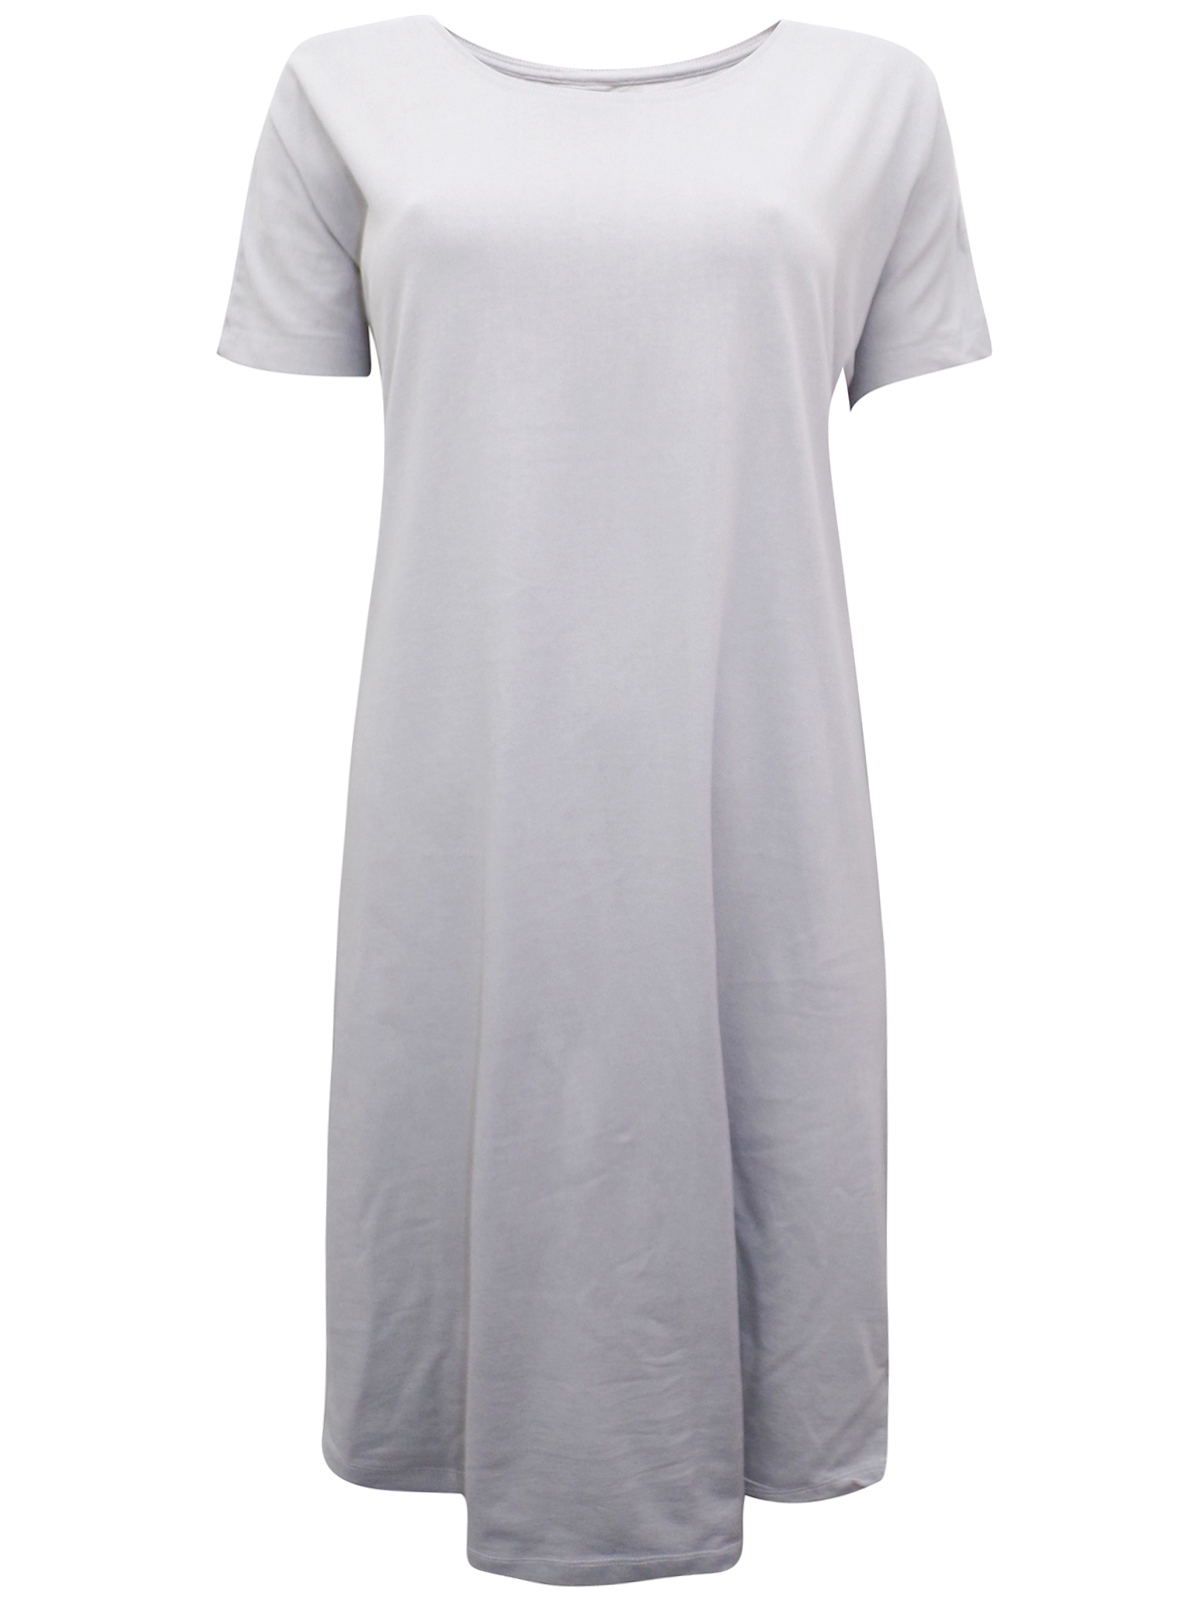 Cloth & Co - - Cloth&Co DOVE-GREY Organic Cotton Short Sleeve Long T ...